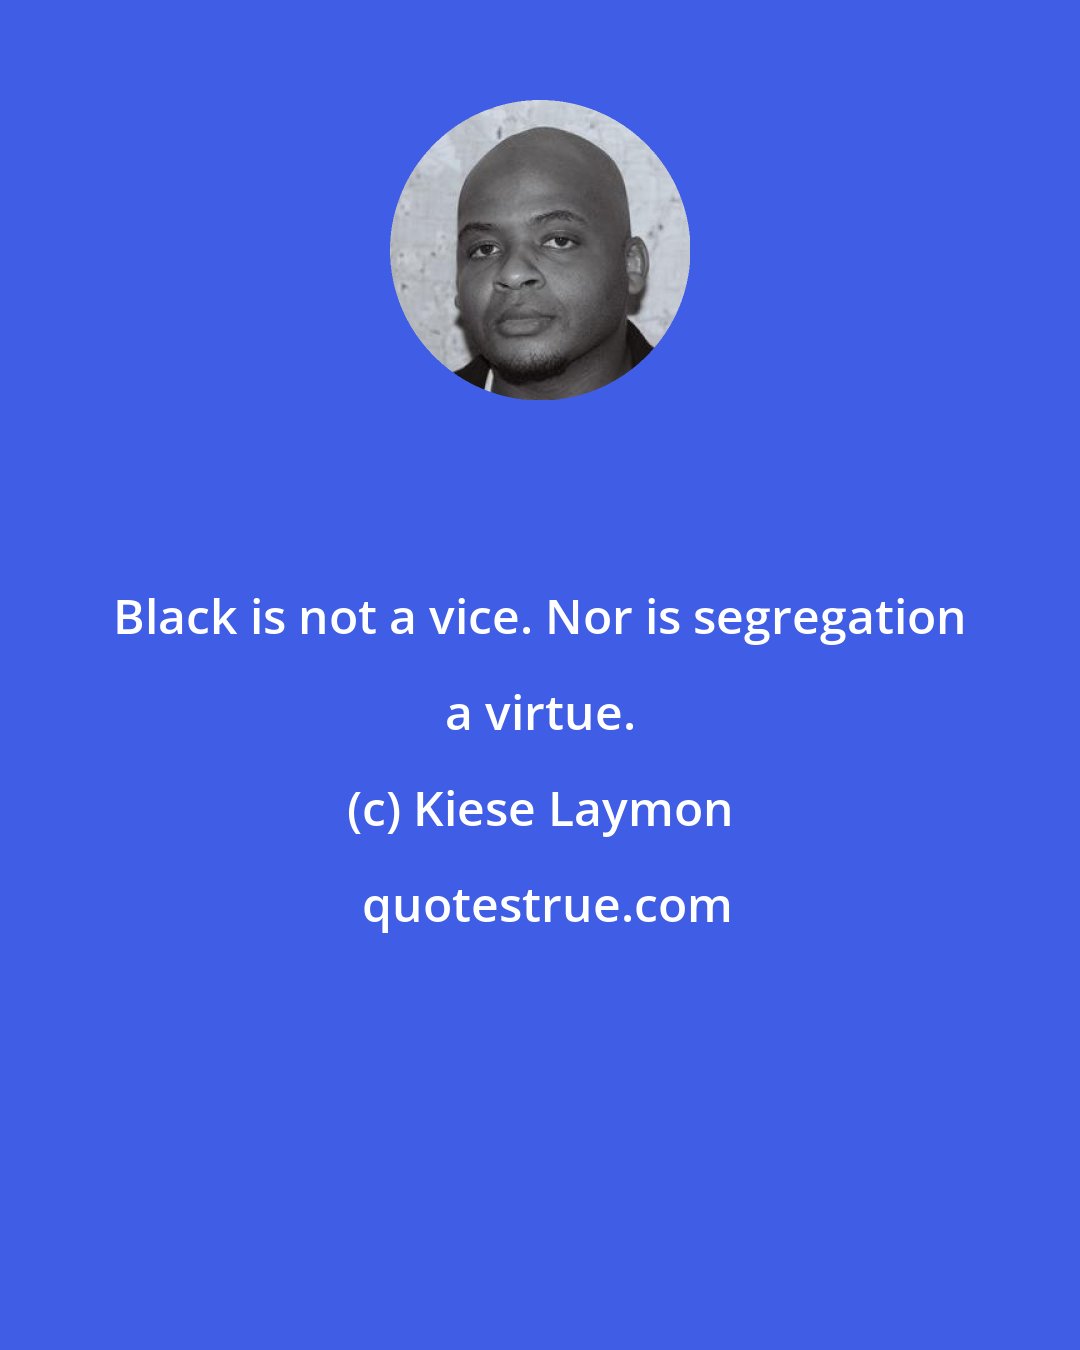 Kiese Laymon: Black is not a vice. Nor is segregation a virtue.